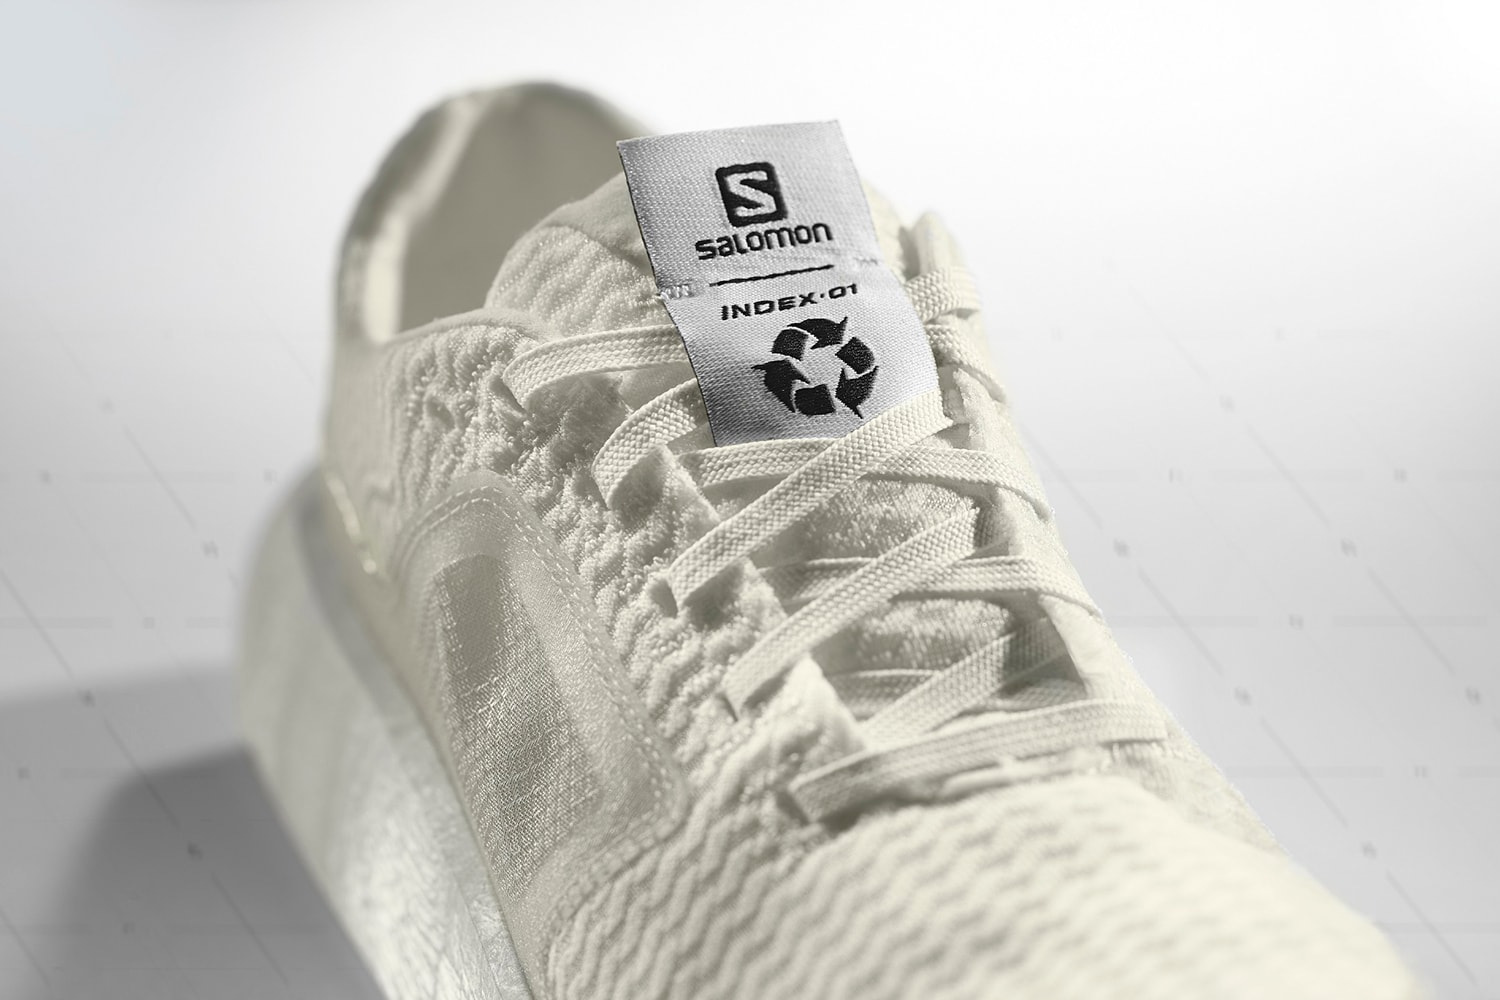 Salomon  全新可回收的性能跑鞋 INDEX.01 正式登场